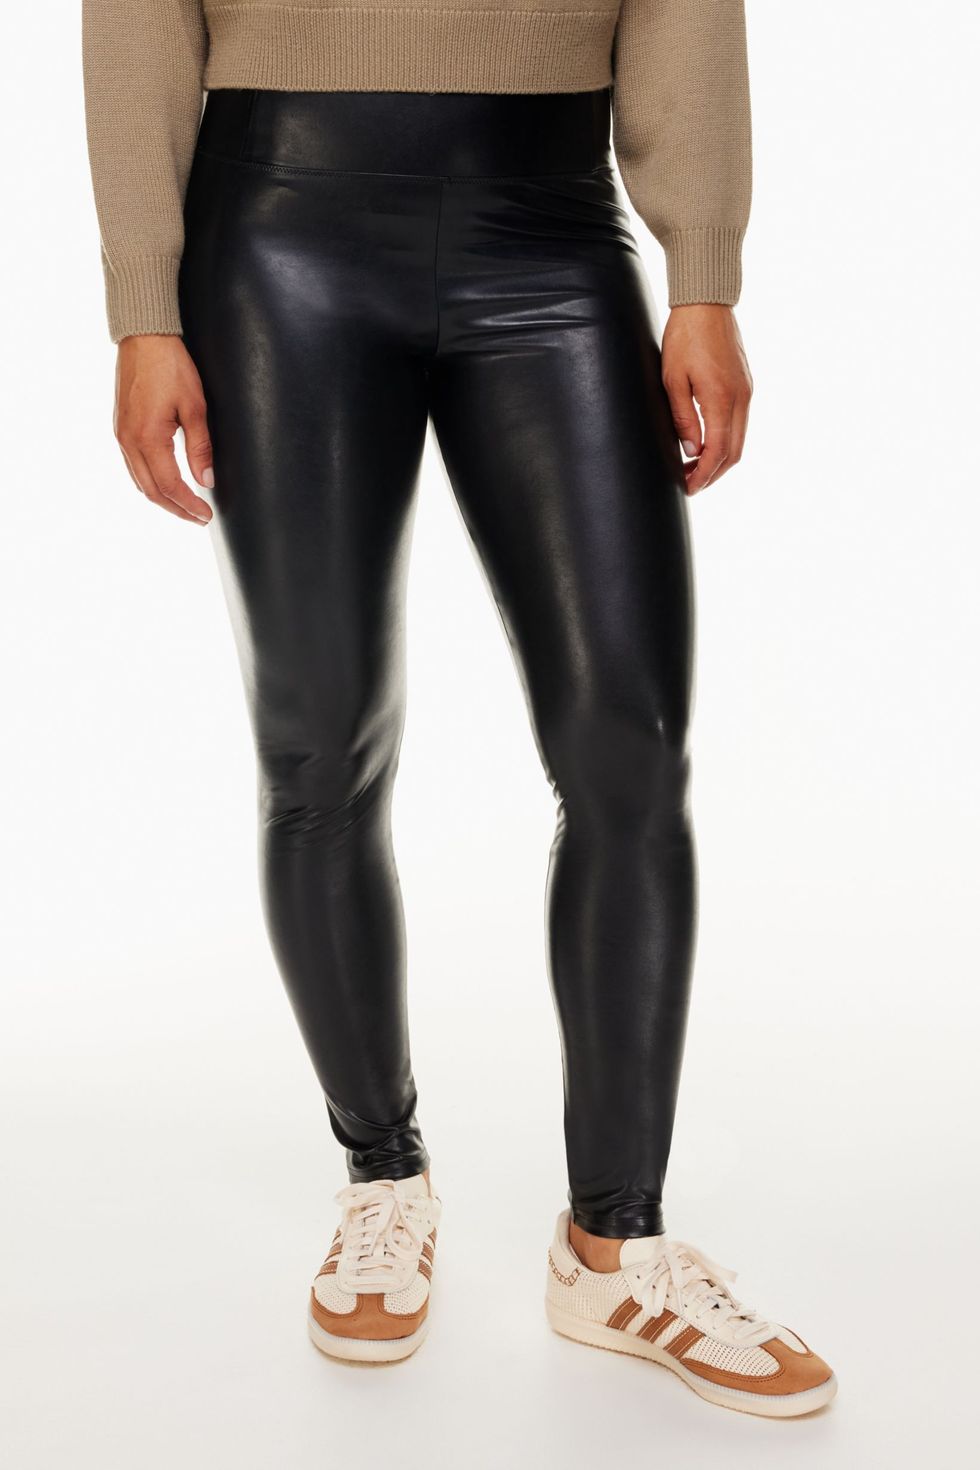 Shiny leggings, leather candids